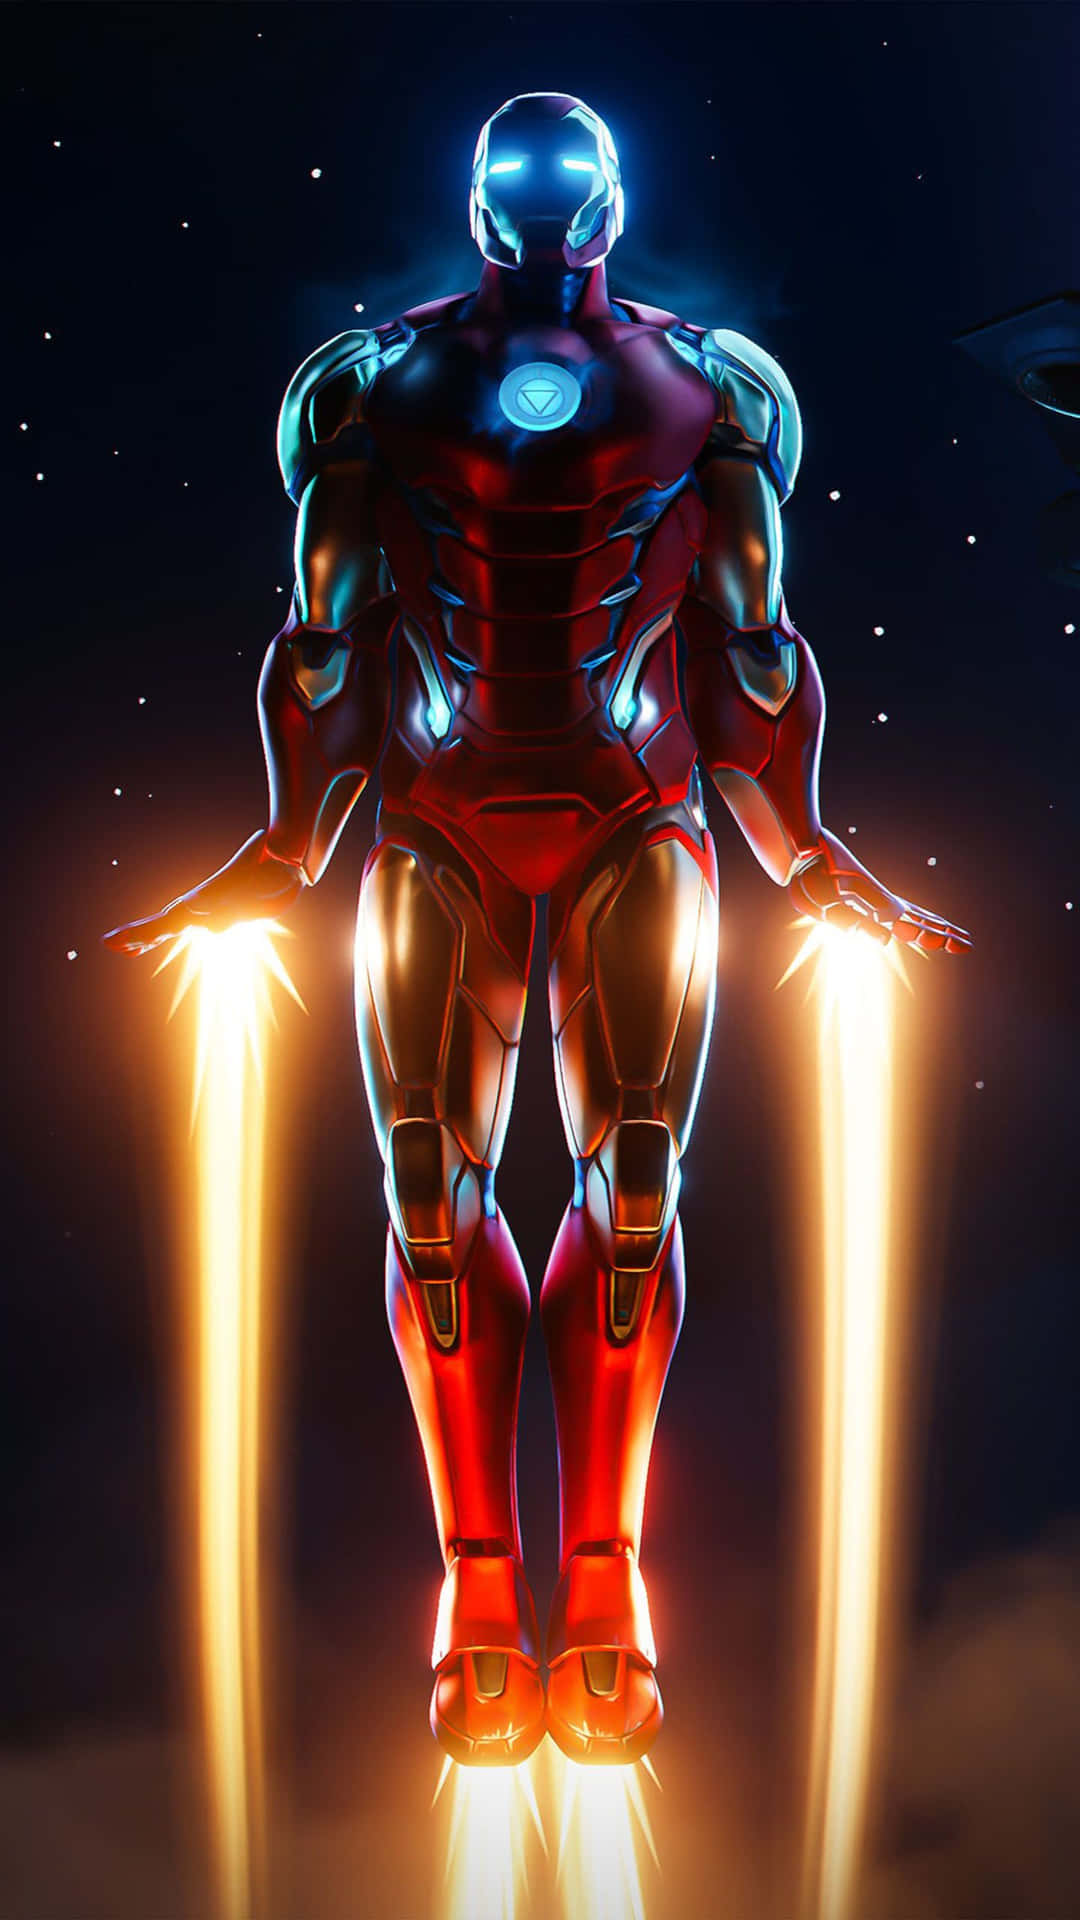 Iron Man Mark 45 Avengers 2 Figure Revealed | Vingadores, Heróis marvel,  Super herói